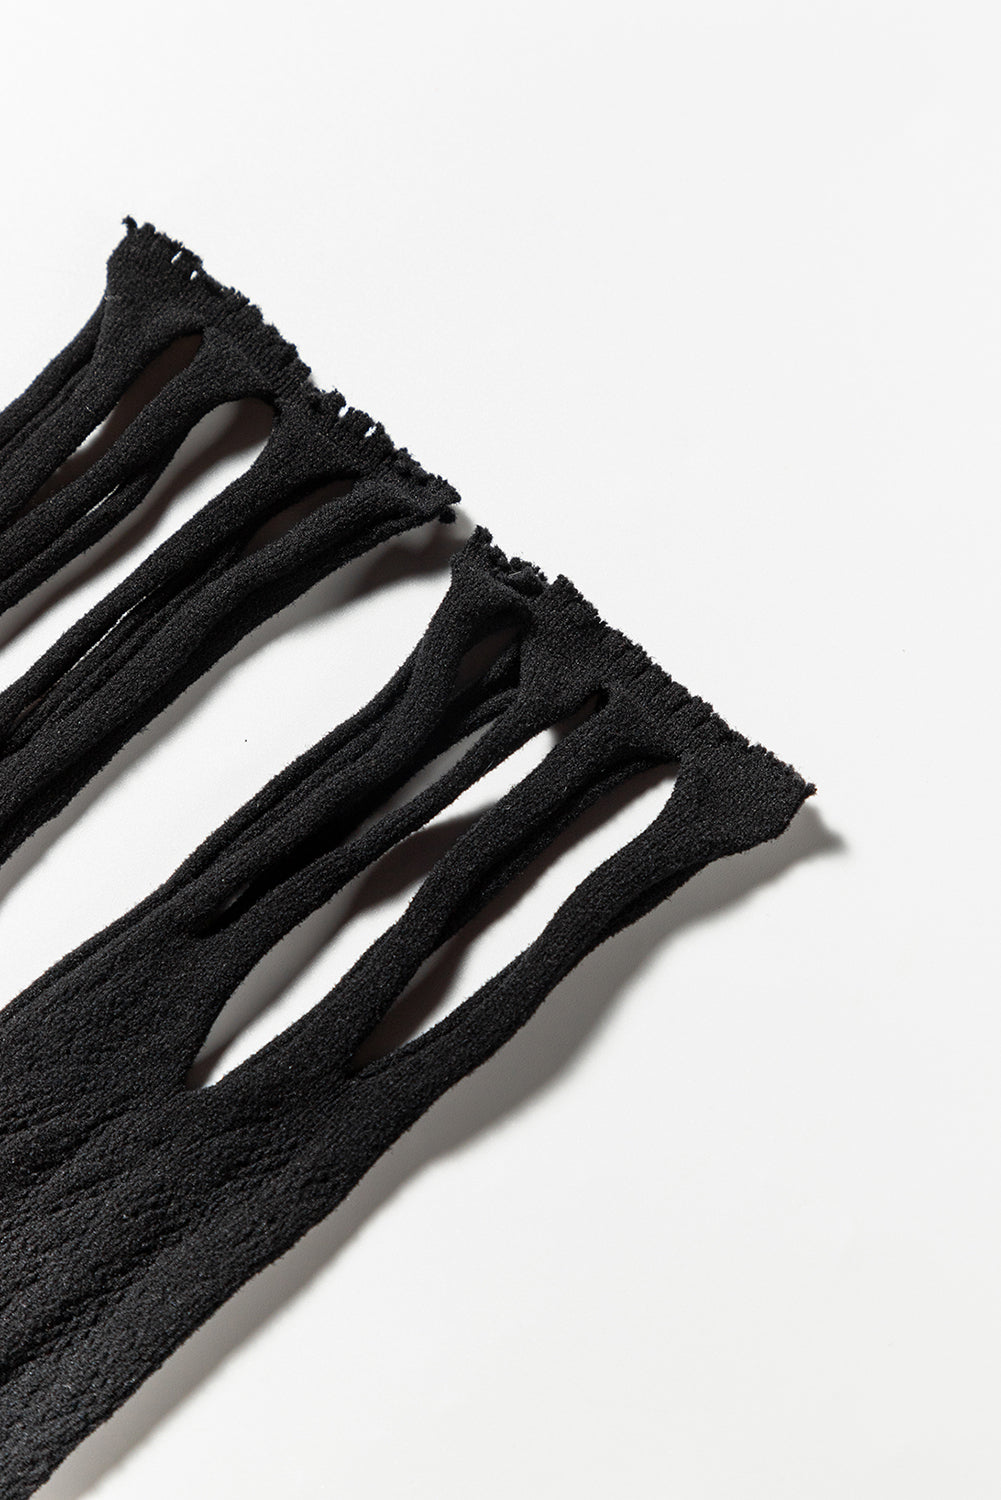 Black Lace Crochet Sleeveless Body Stockings